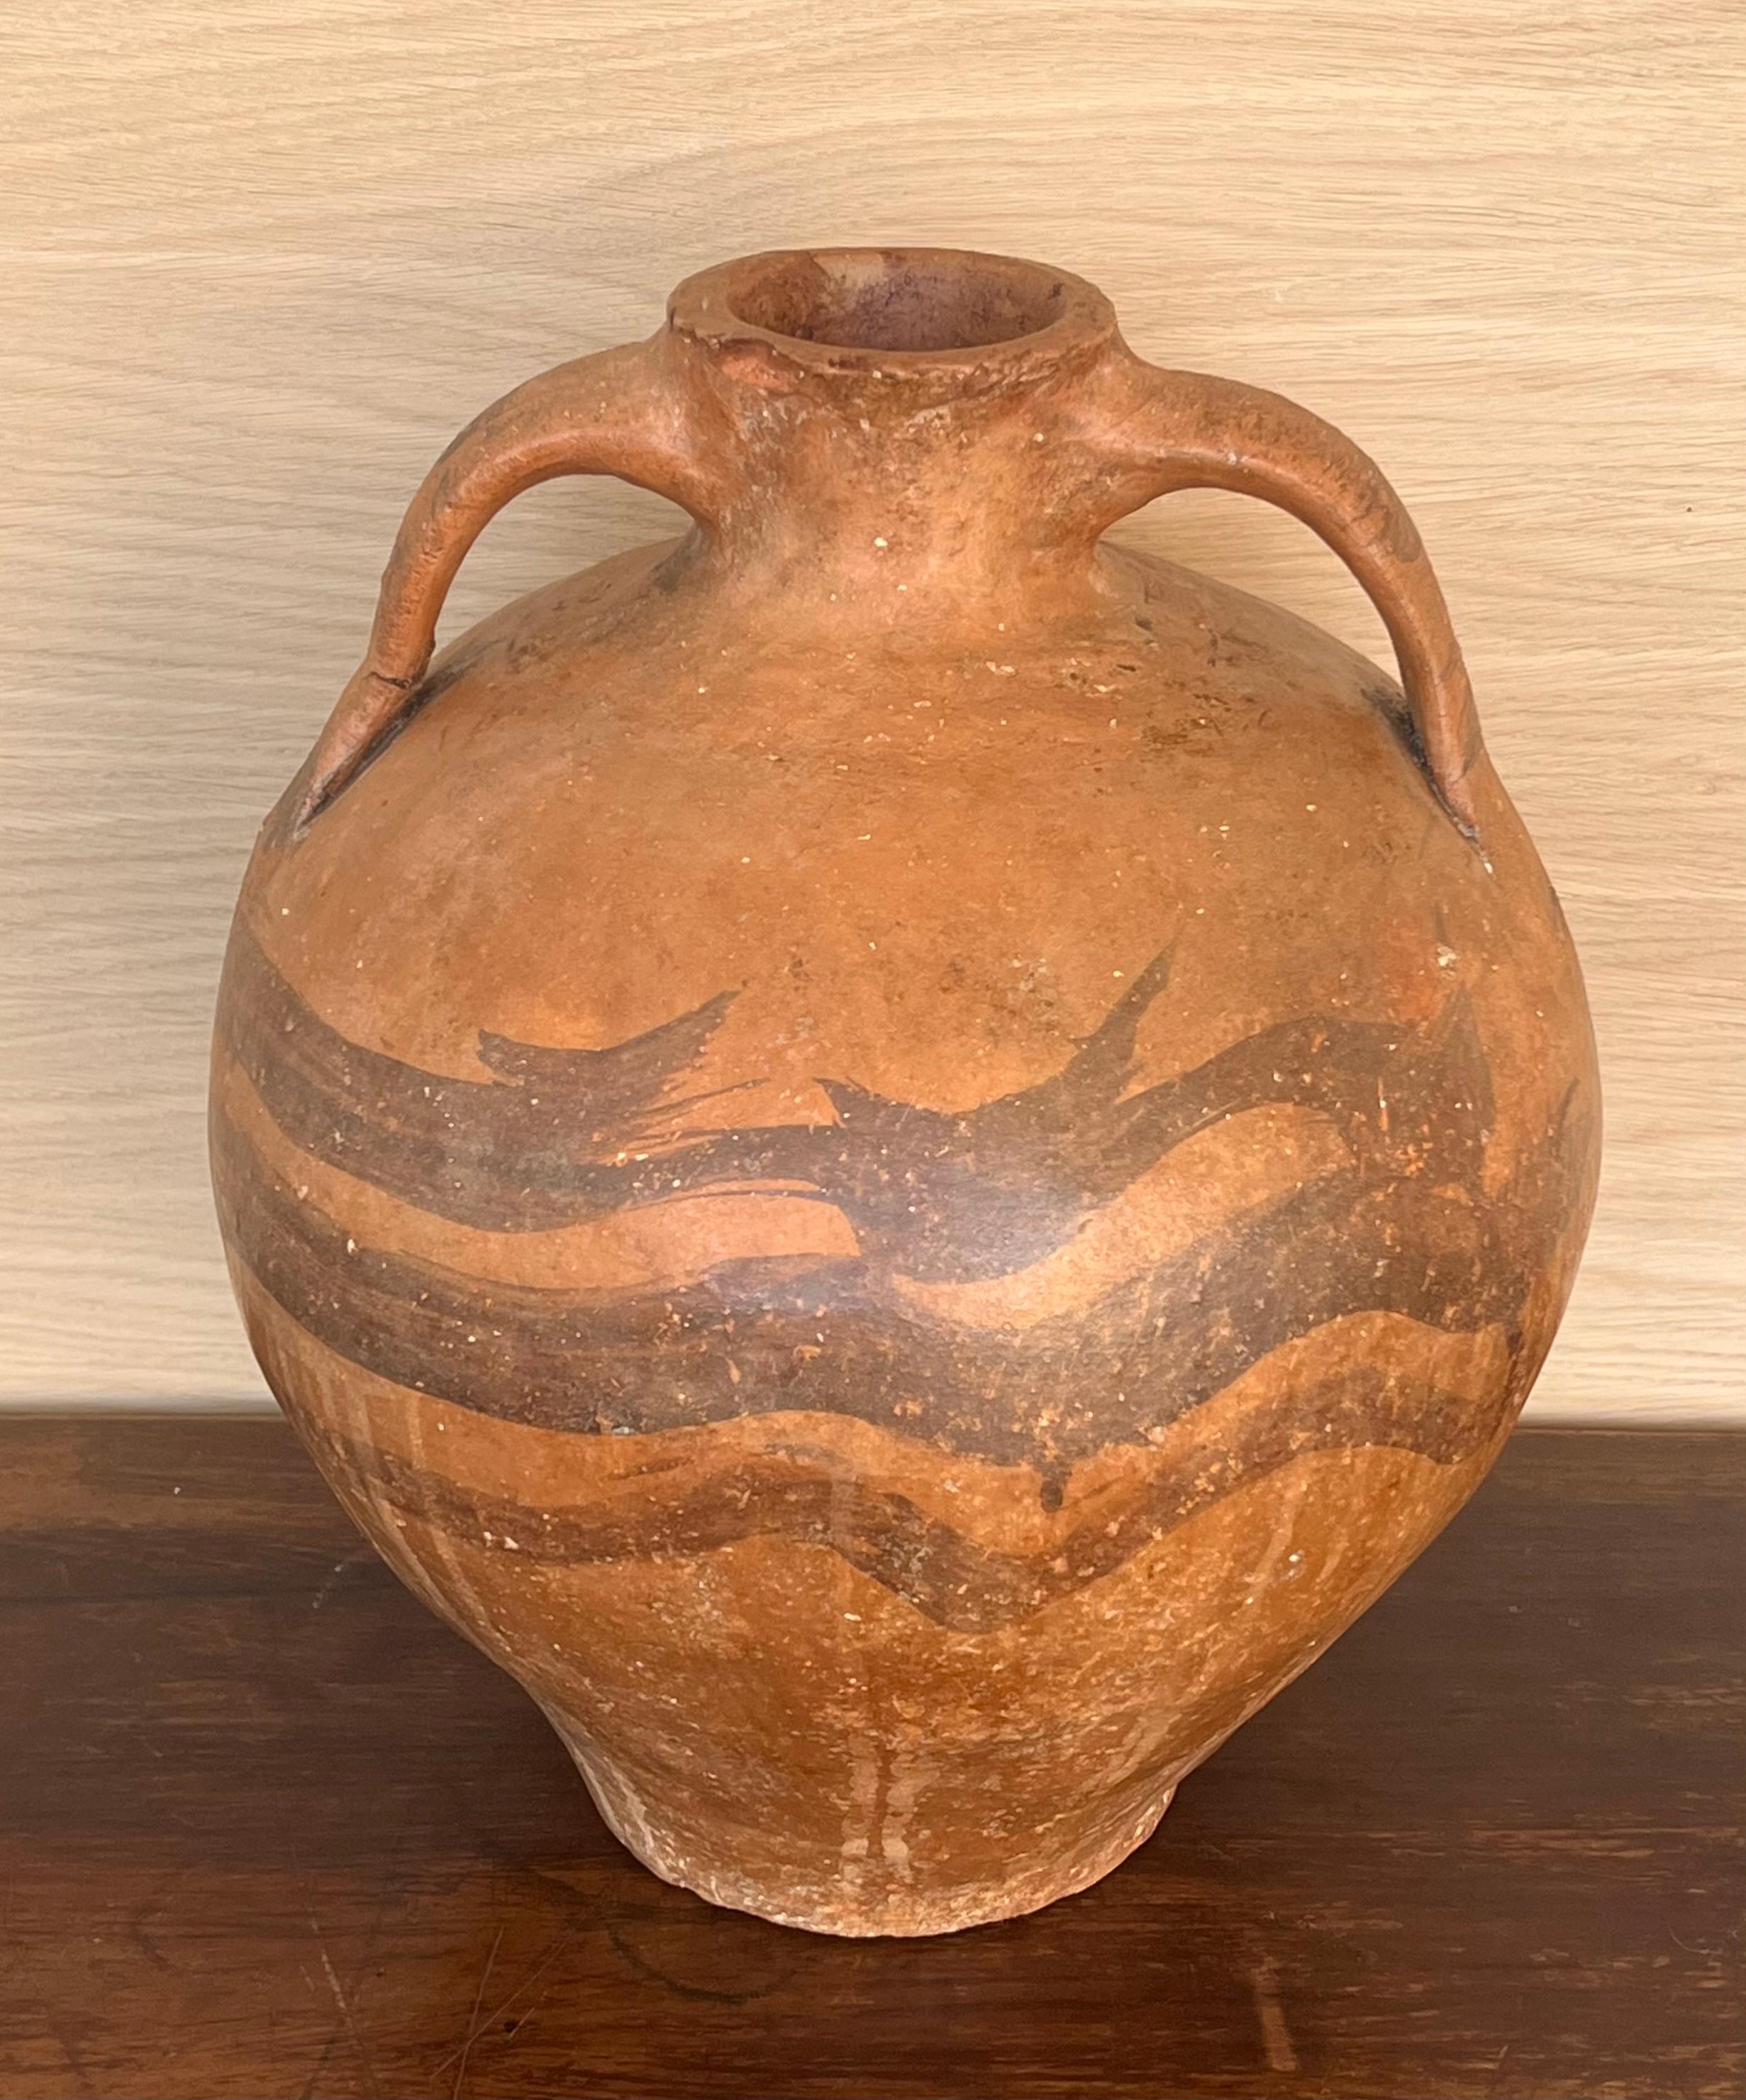 Brautkrug-Vase „Cantaro“ aus Calanda, Spanien, Terrakotta-Vase, 18. Jahrhundert (Barock) im Angebot